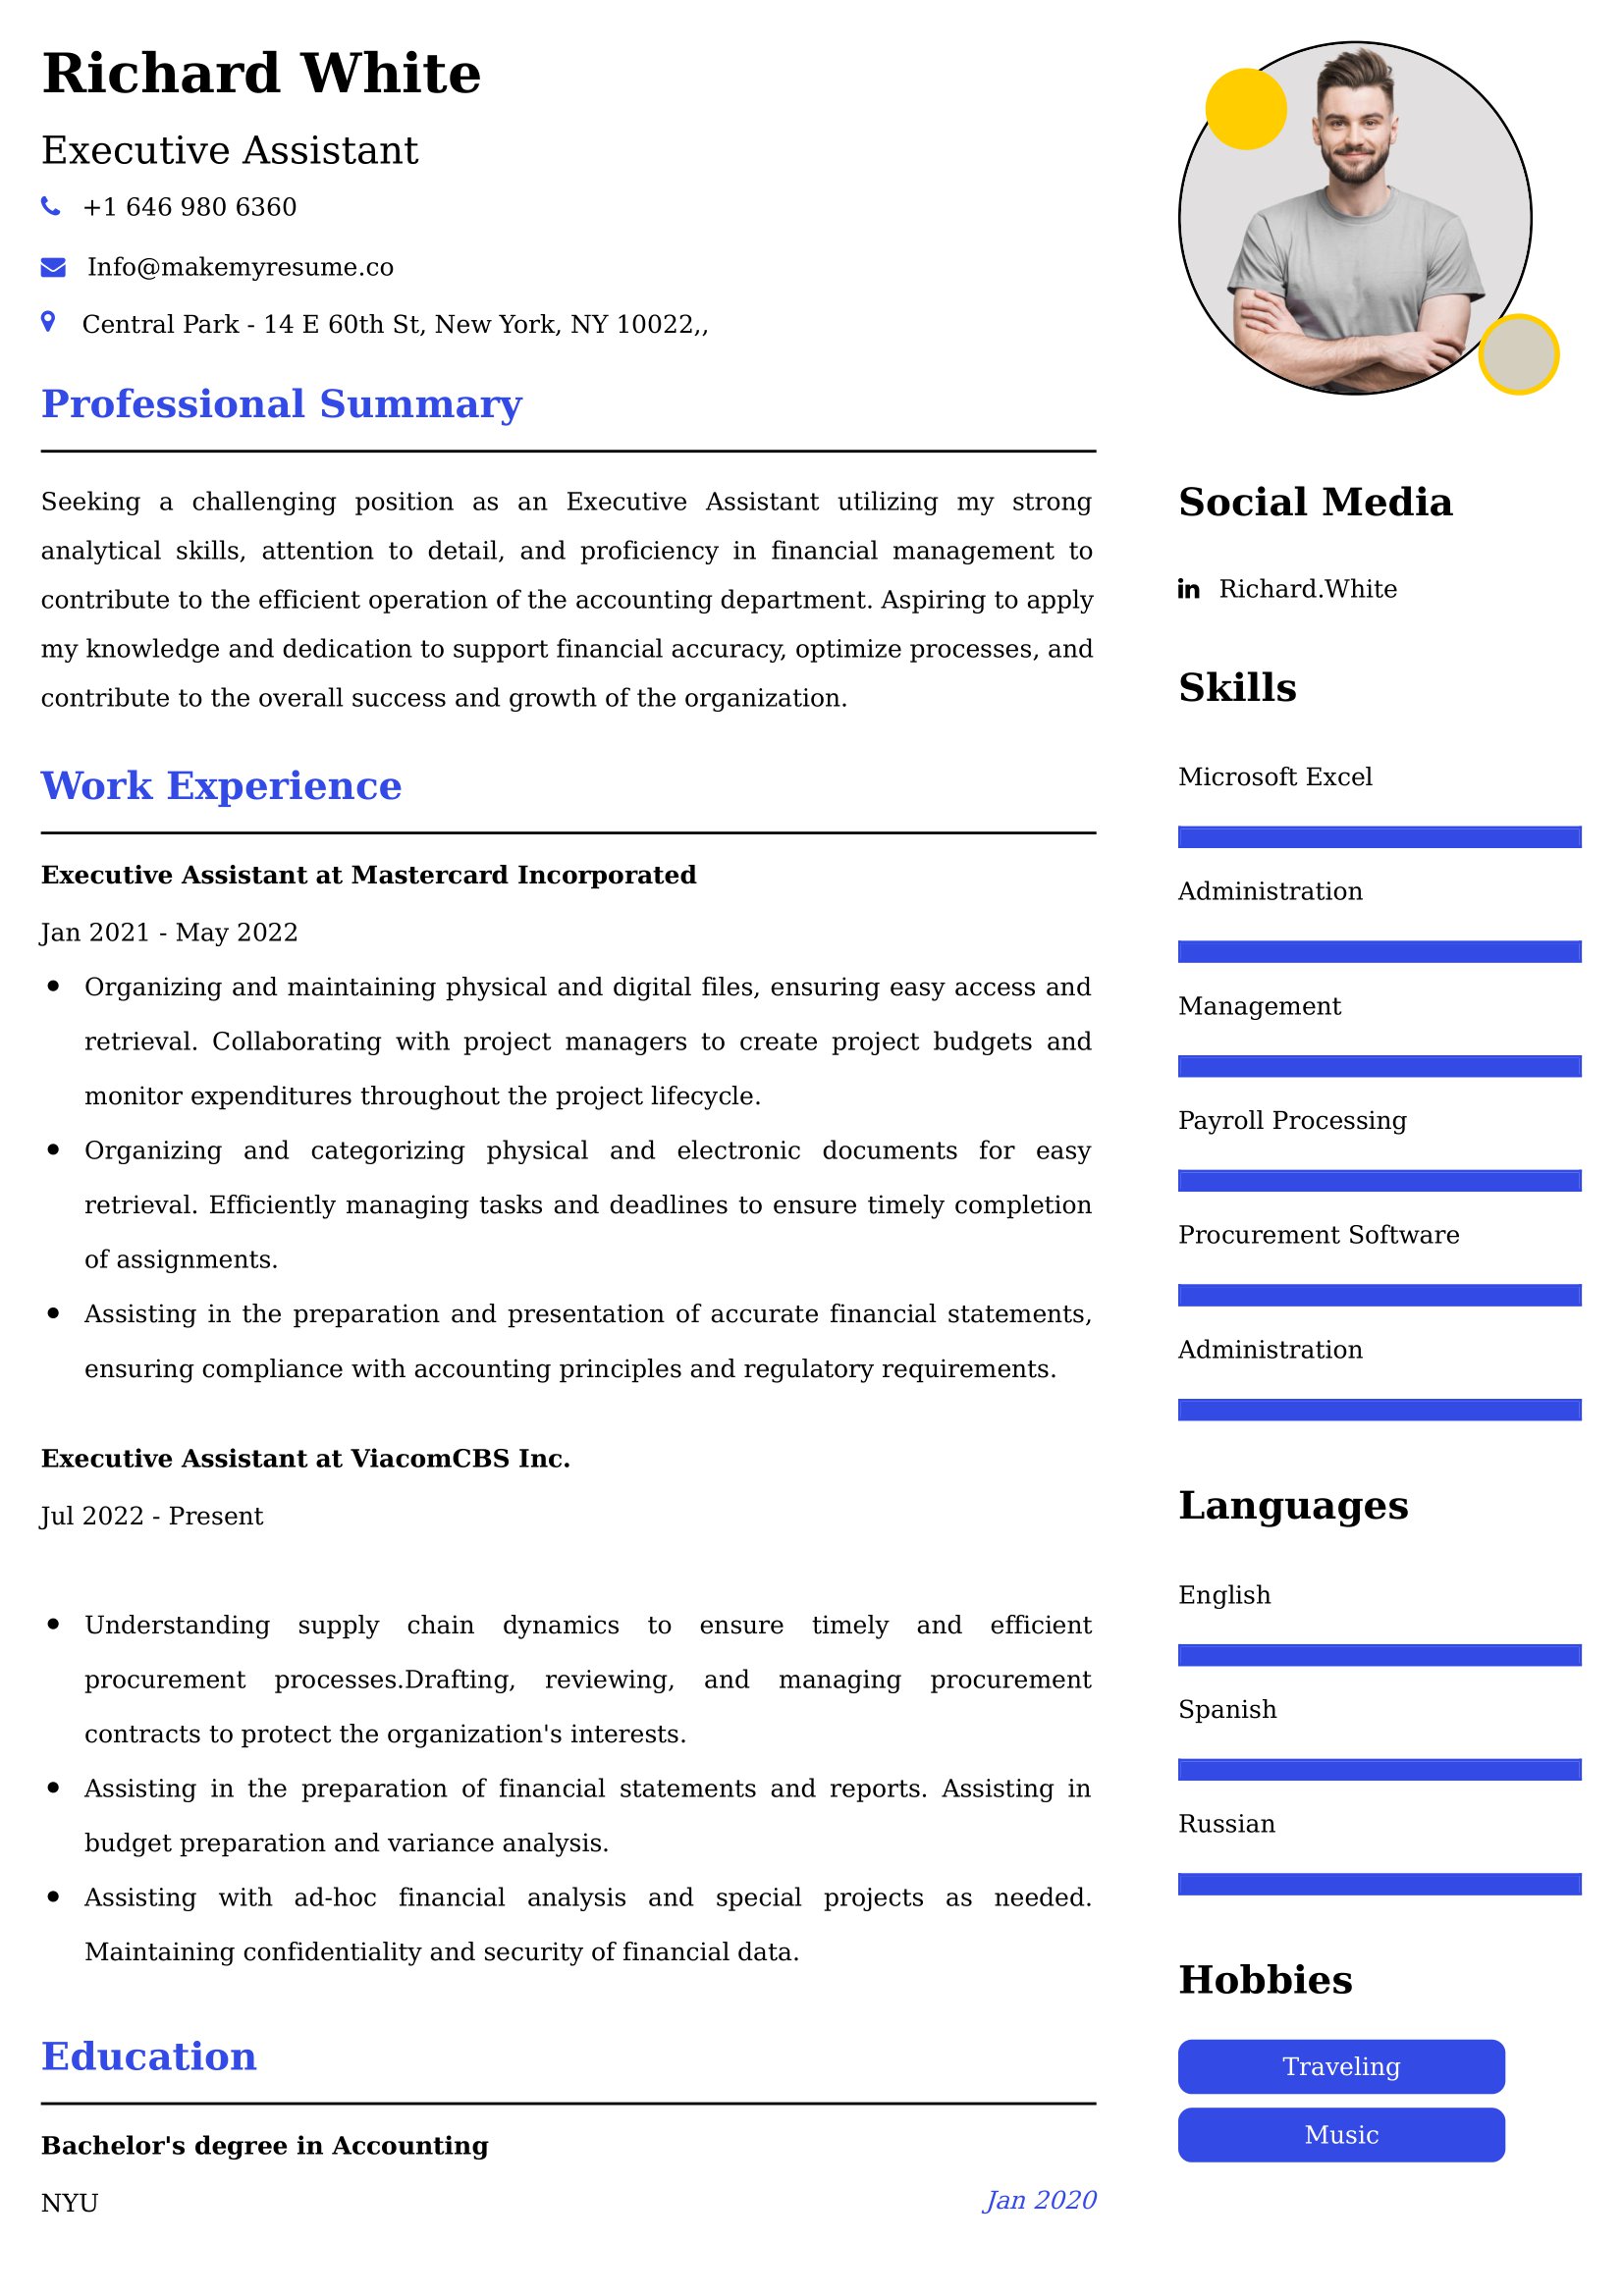 Executive Assistant CV Examples Malaysia